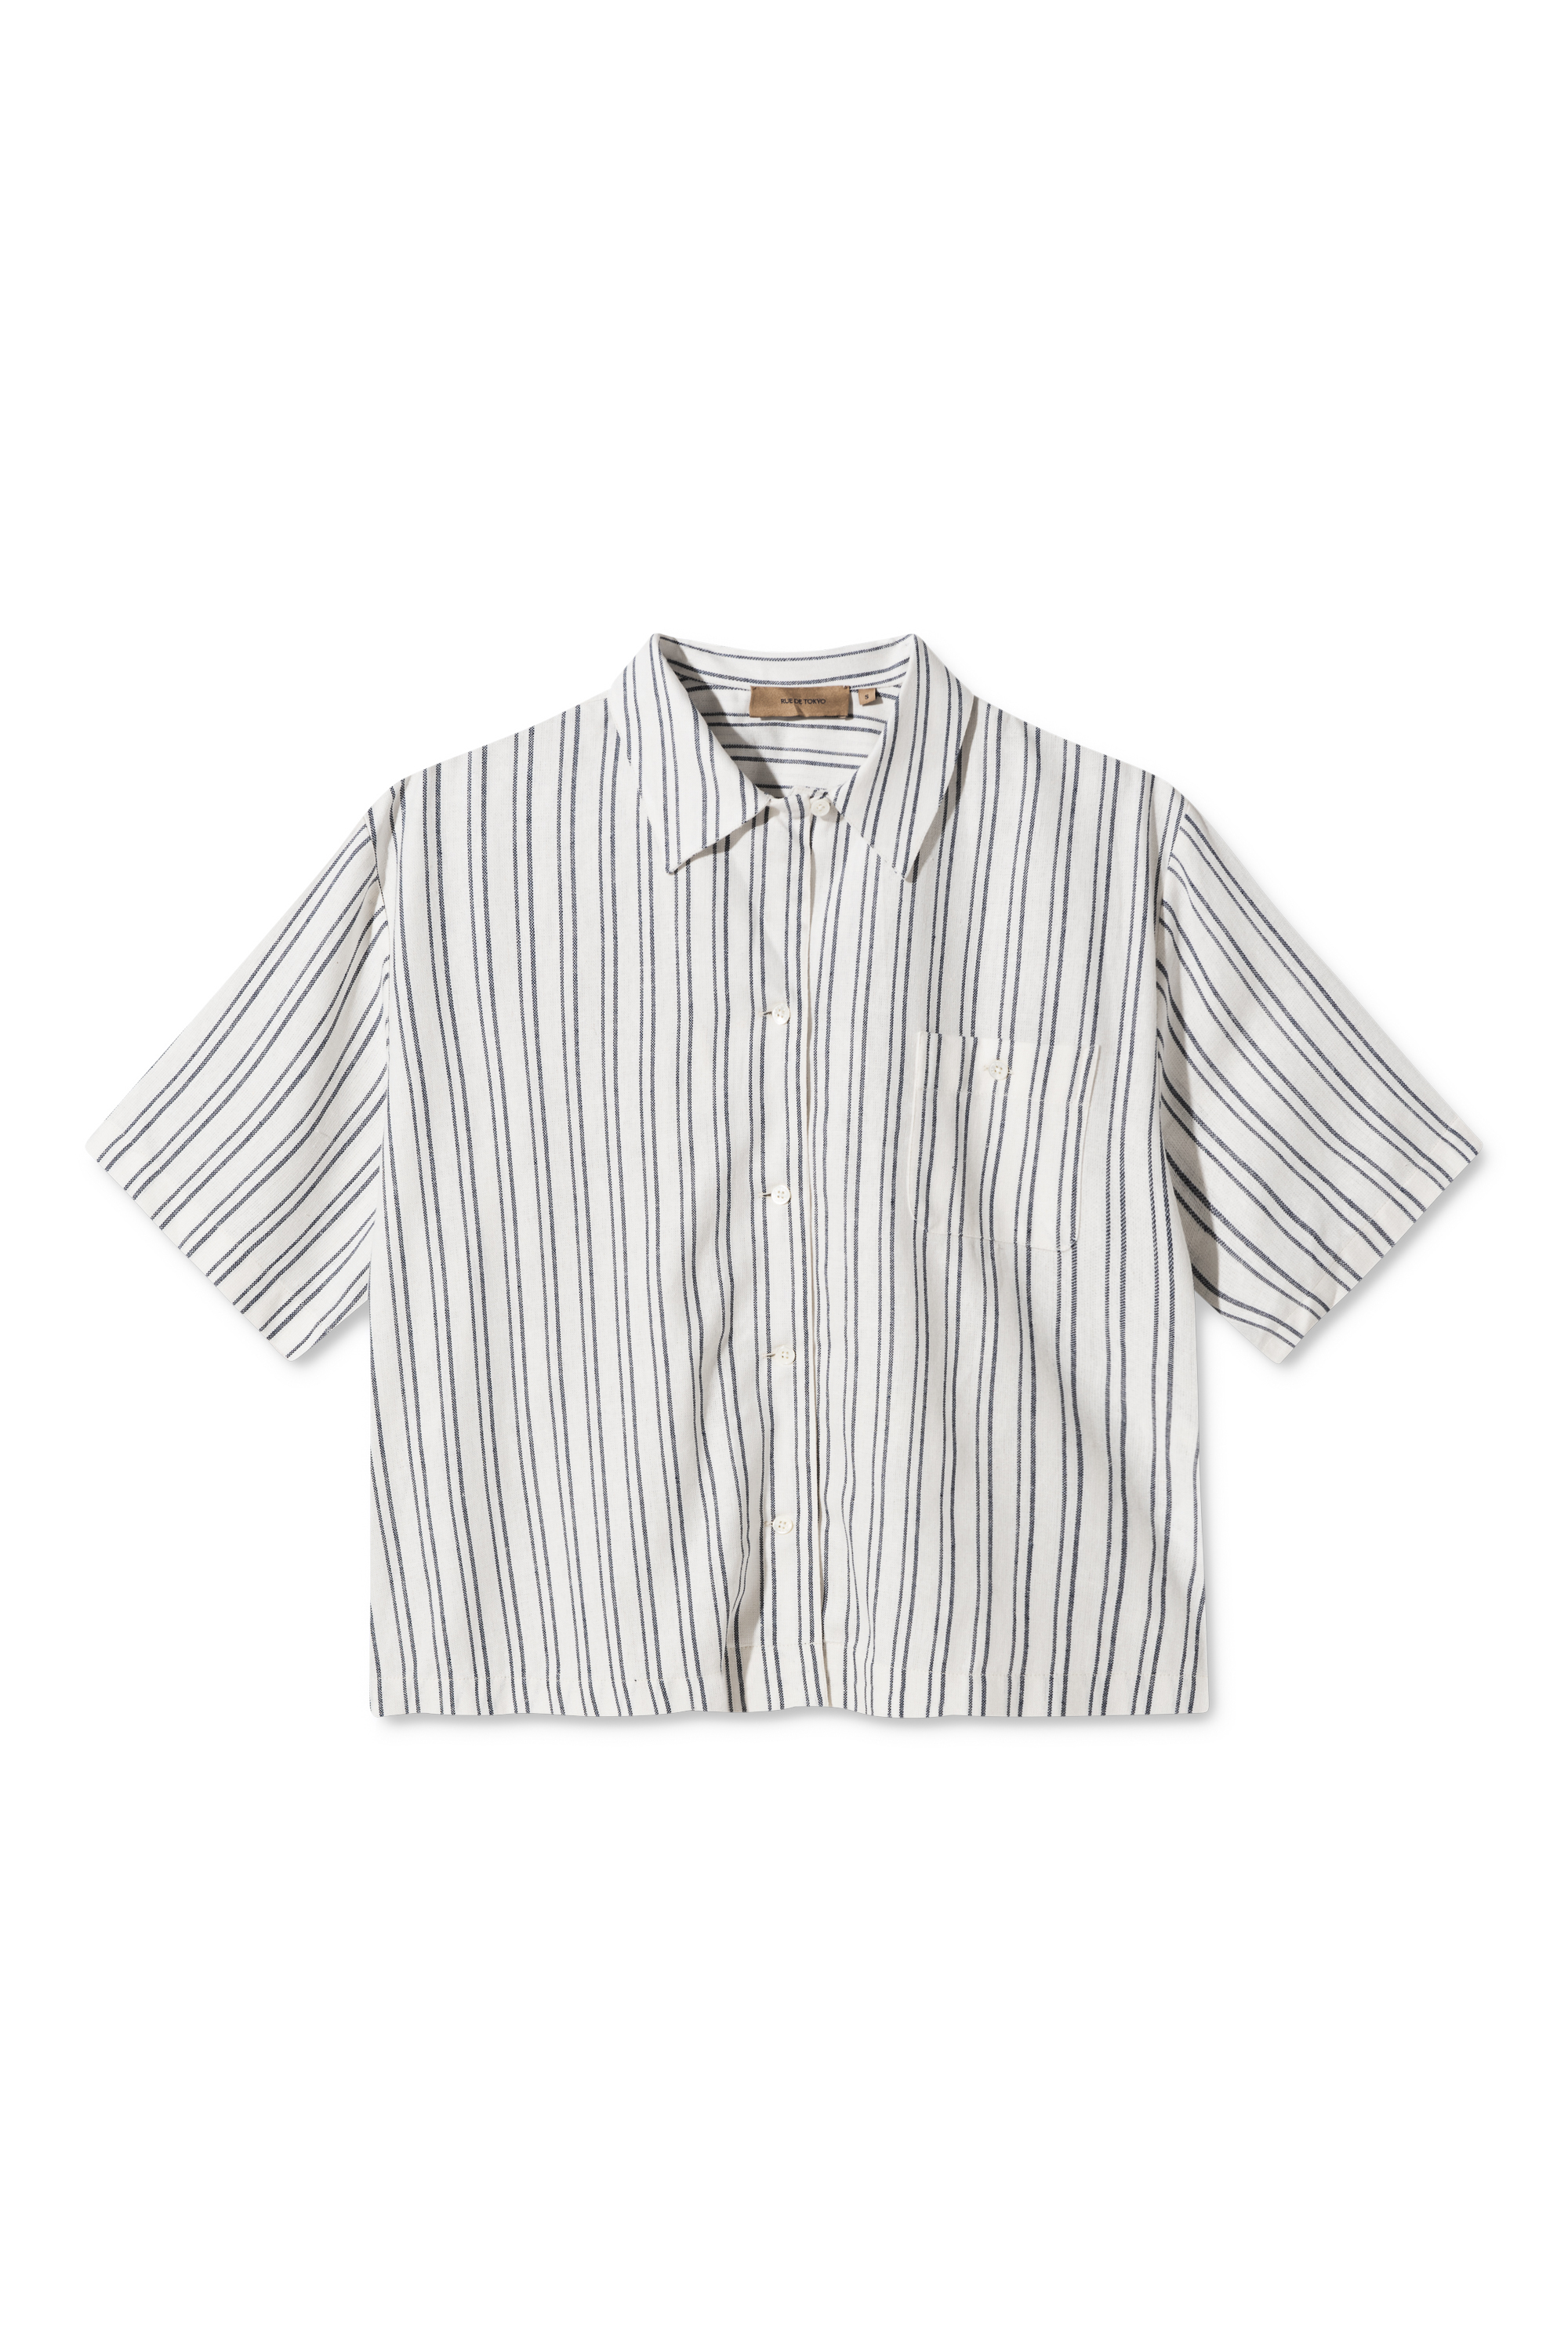 Rue De Tokyo White and Blue Stripe Susan Pure Stripe Shirt